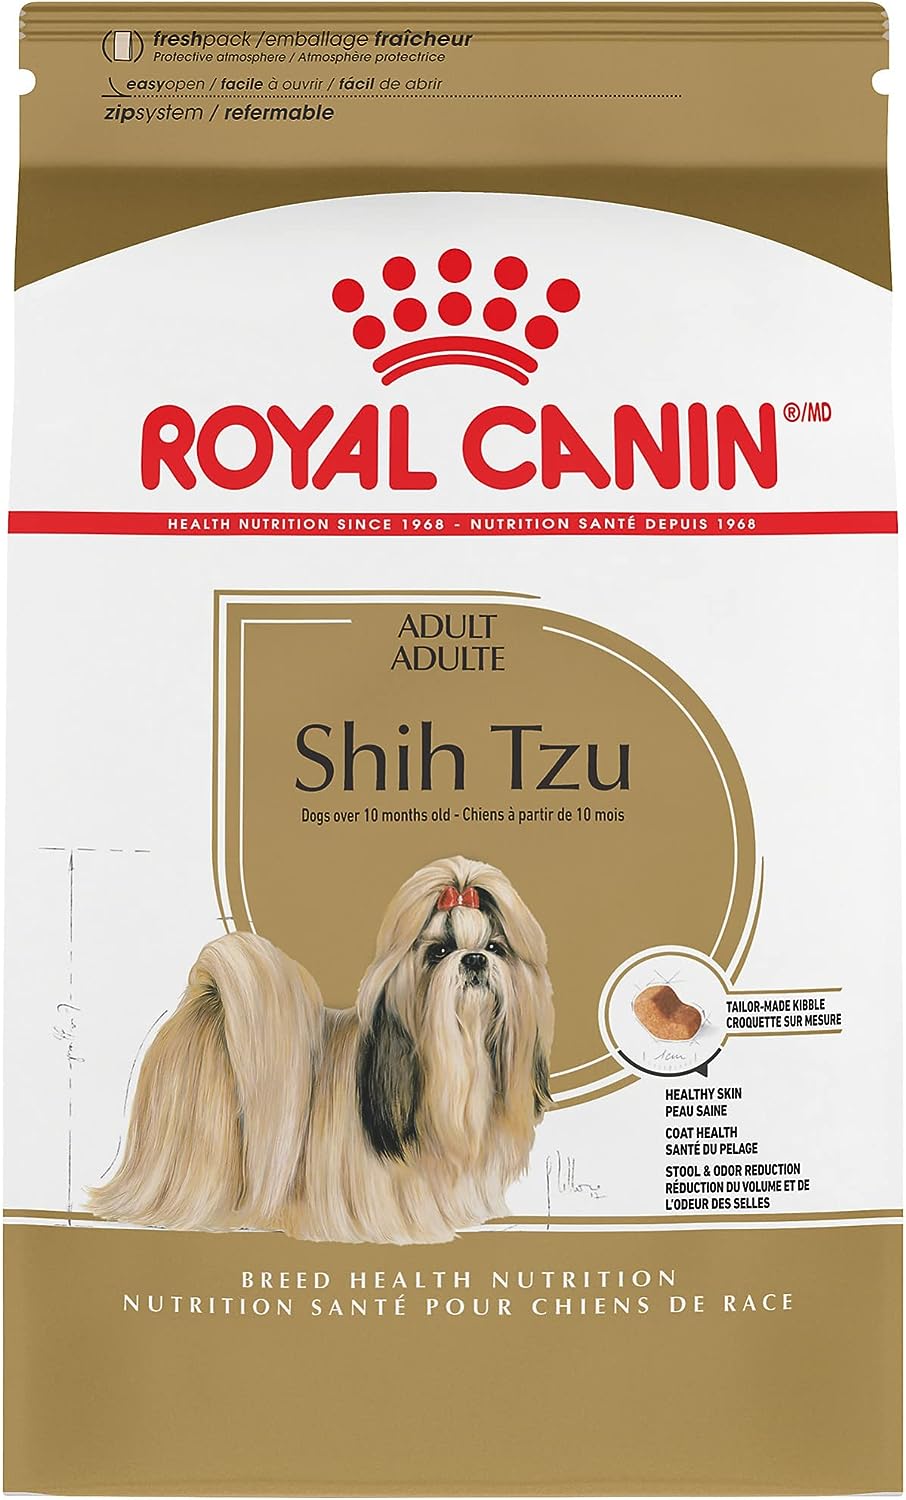 Royal Canin Shih Tzu Adult Breed Specific Dry Dog Food, 2.5 lb bag